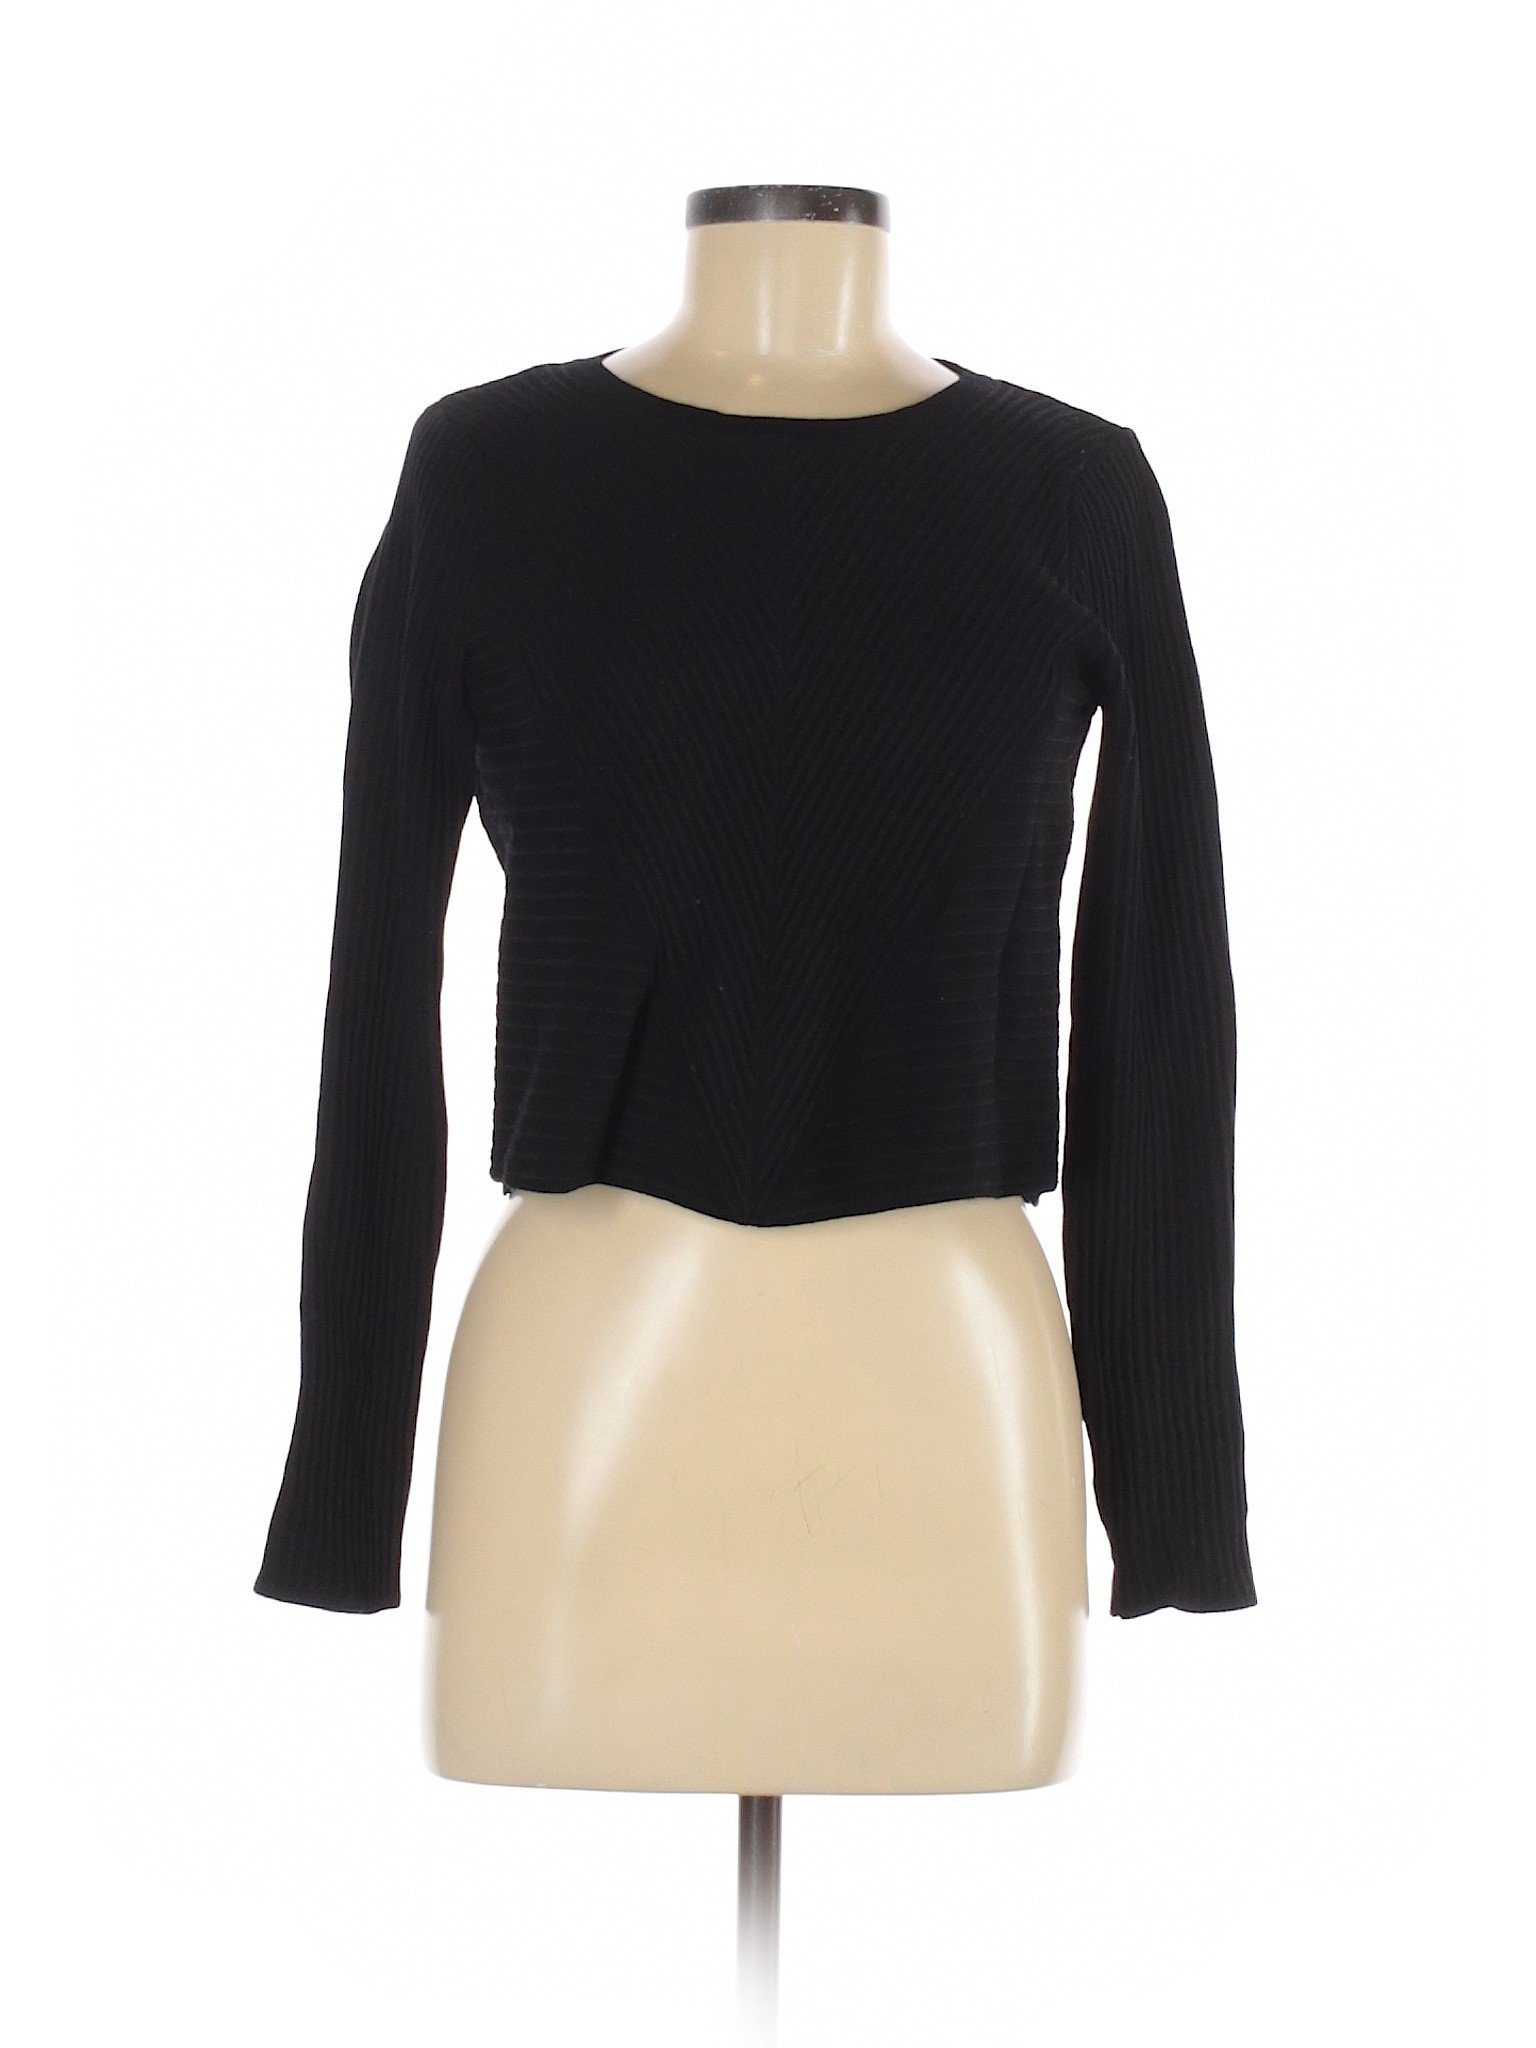 Zara Women Black Pullover Sweater M | eBay